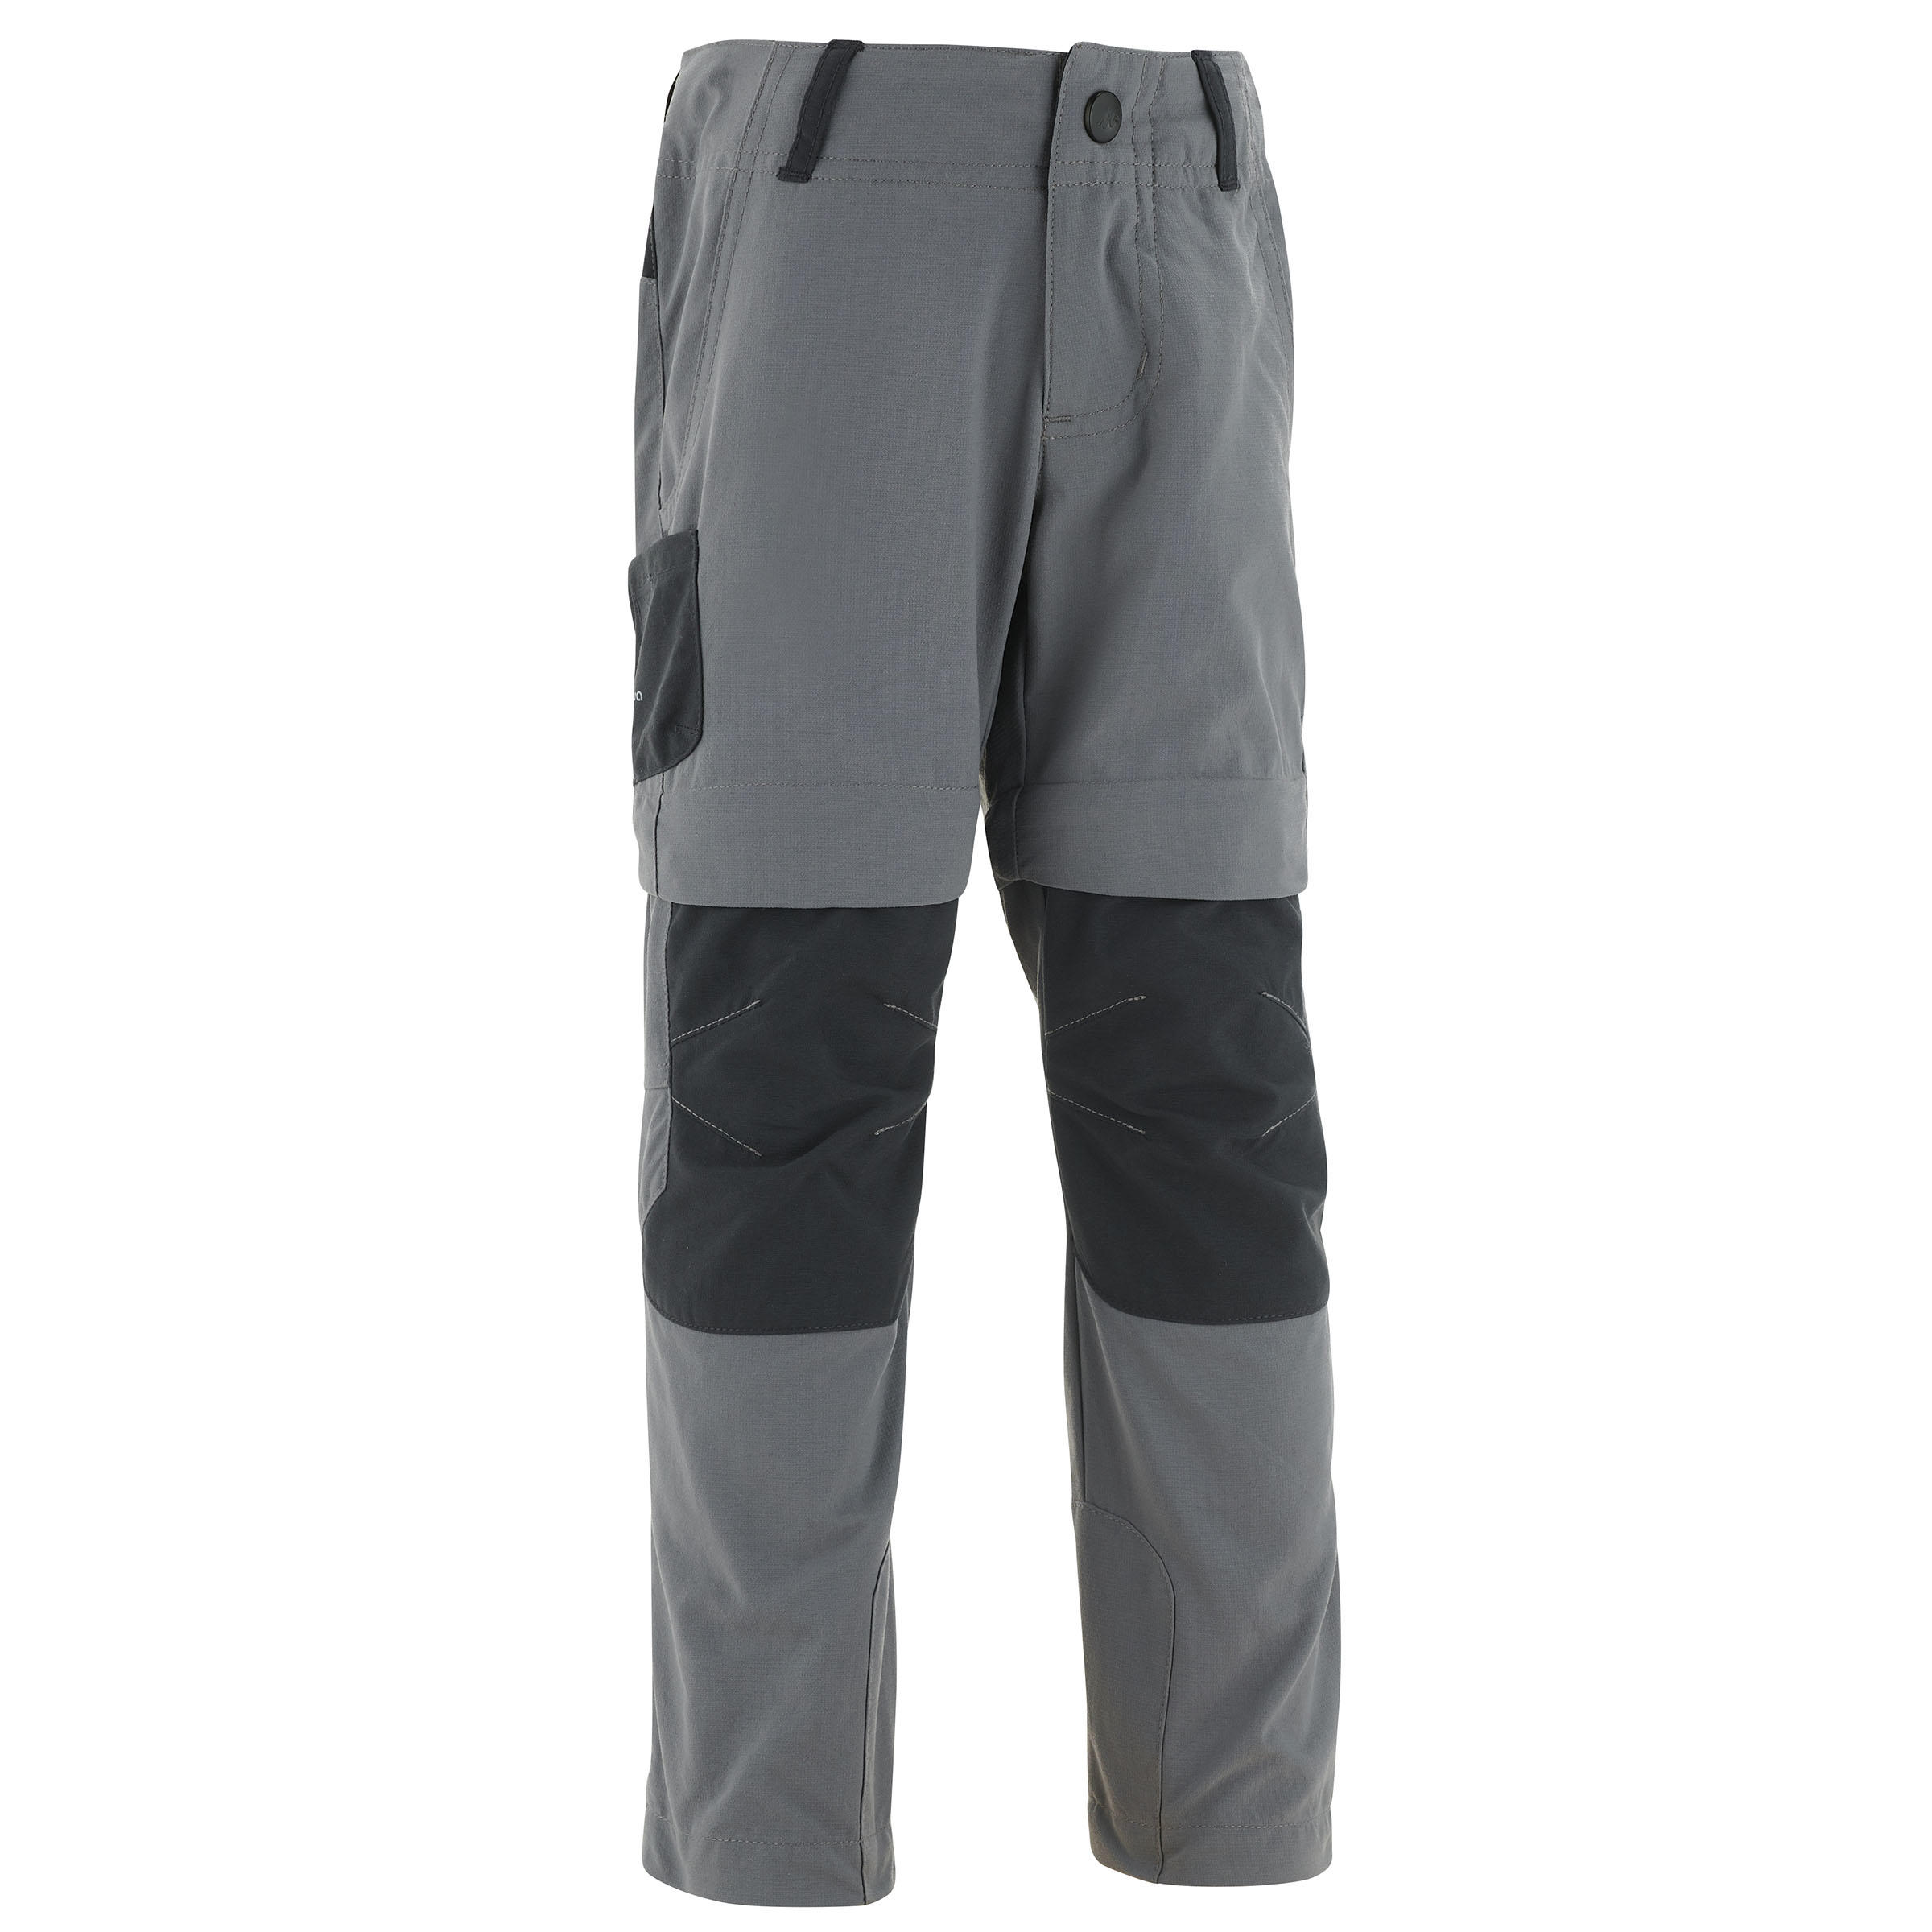 Mid Standard ZipOff Pant Men  Sand  Hiking  Bottoms  Activities   Hiking  Activities  Trousers  Shorts  Men  Hiking trousers  Haglöfs